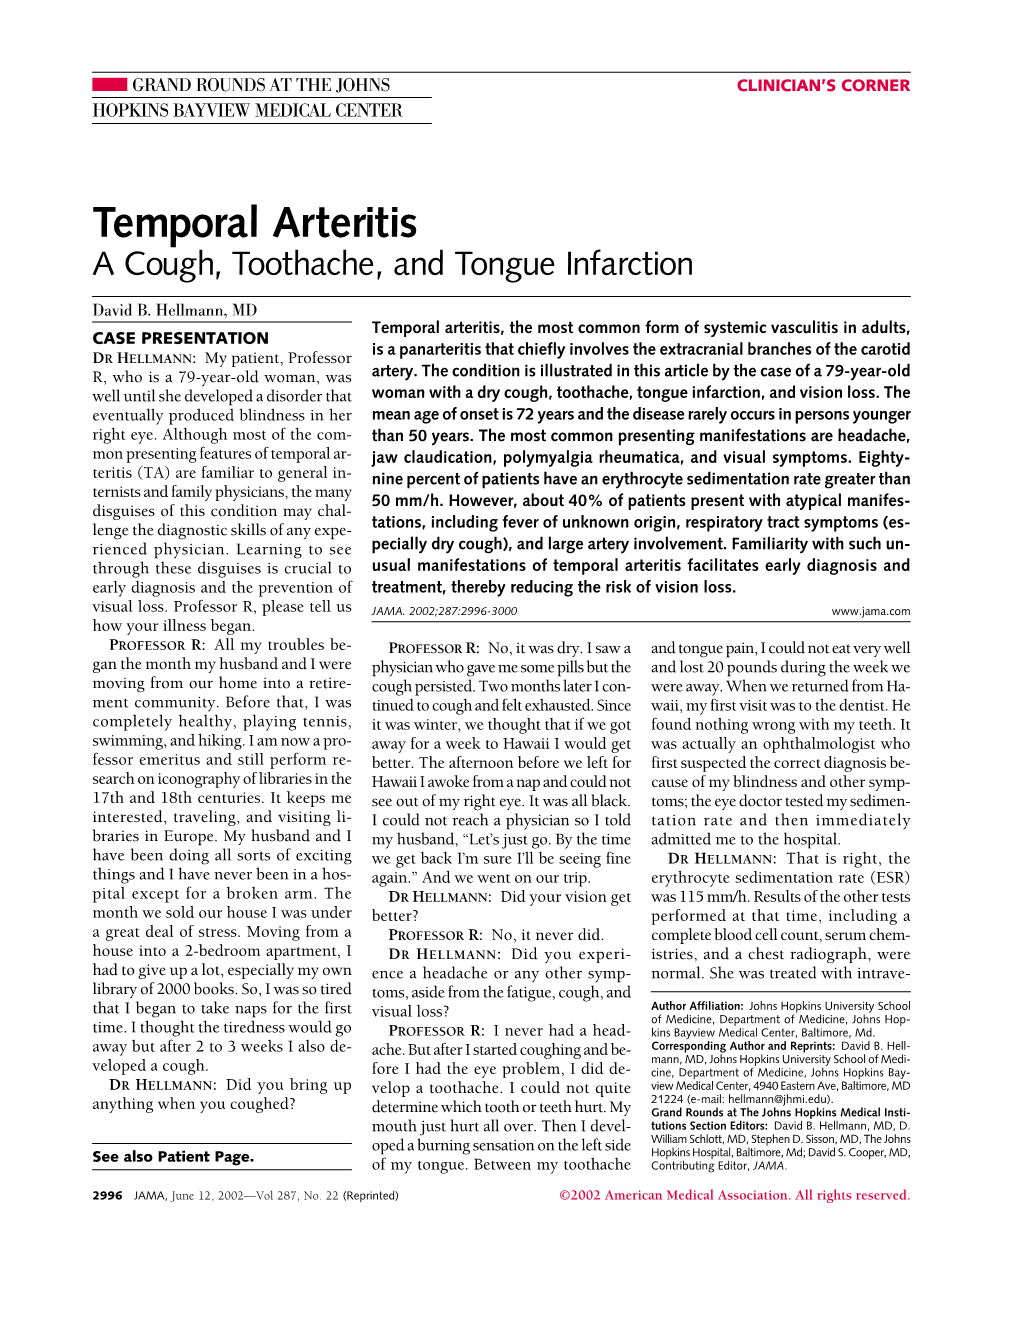 Temporal Arteritis a Cough, Toothache, and Tongue Infarction